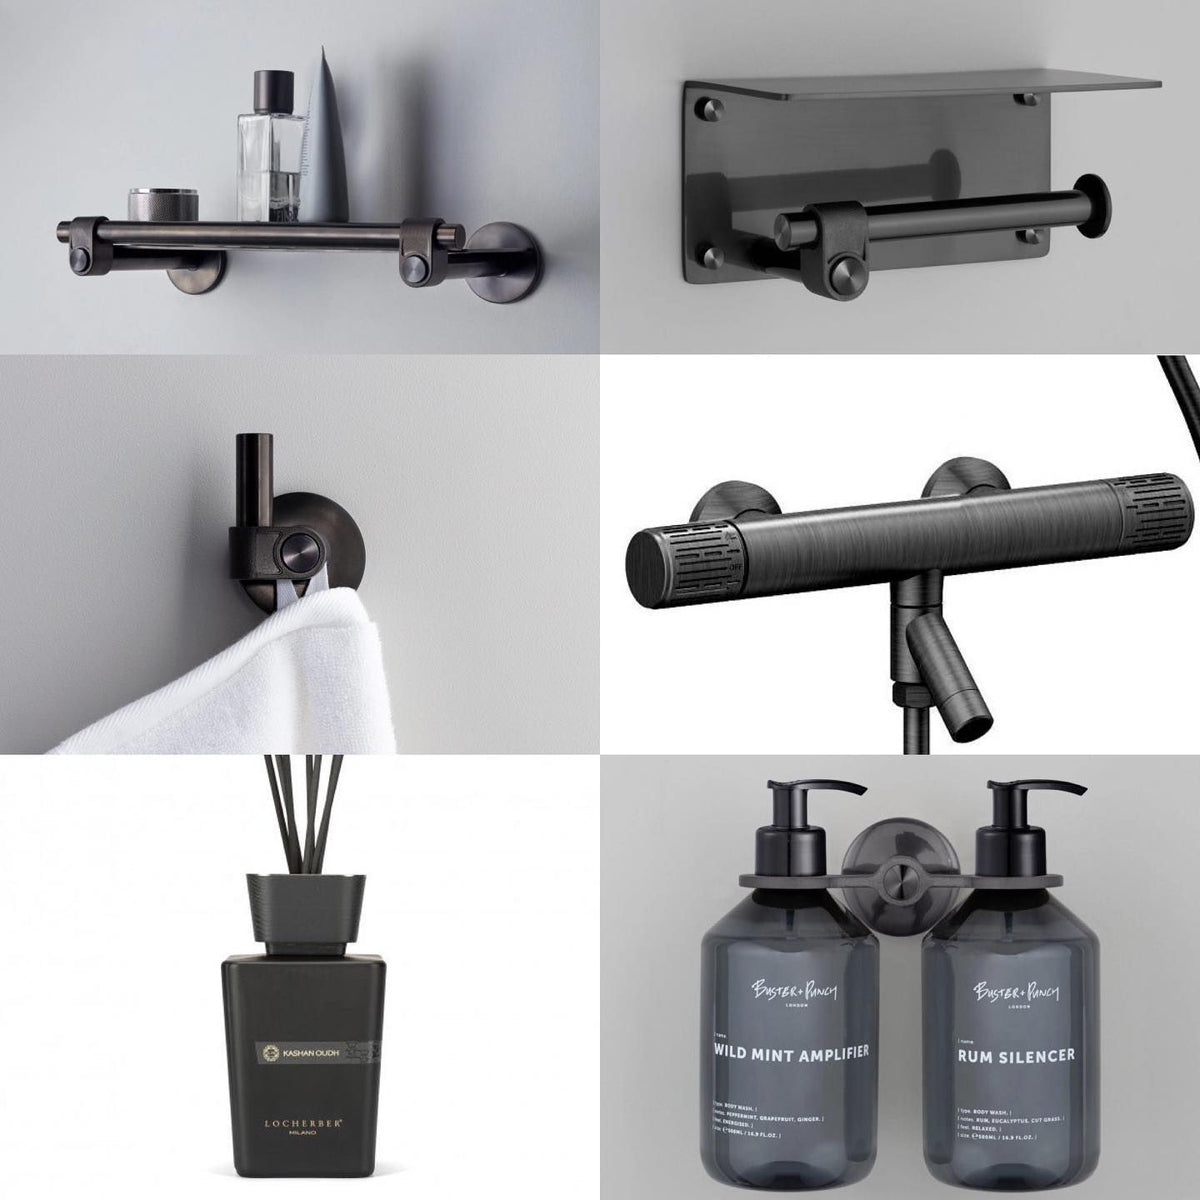 Luxury Gun Metal Thermostatic Bathtub Faucet with Handheld Shower - |VESIMI Design| Luxury and Rustic bathrooms online